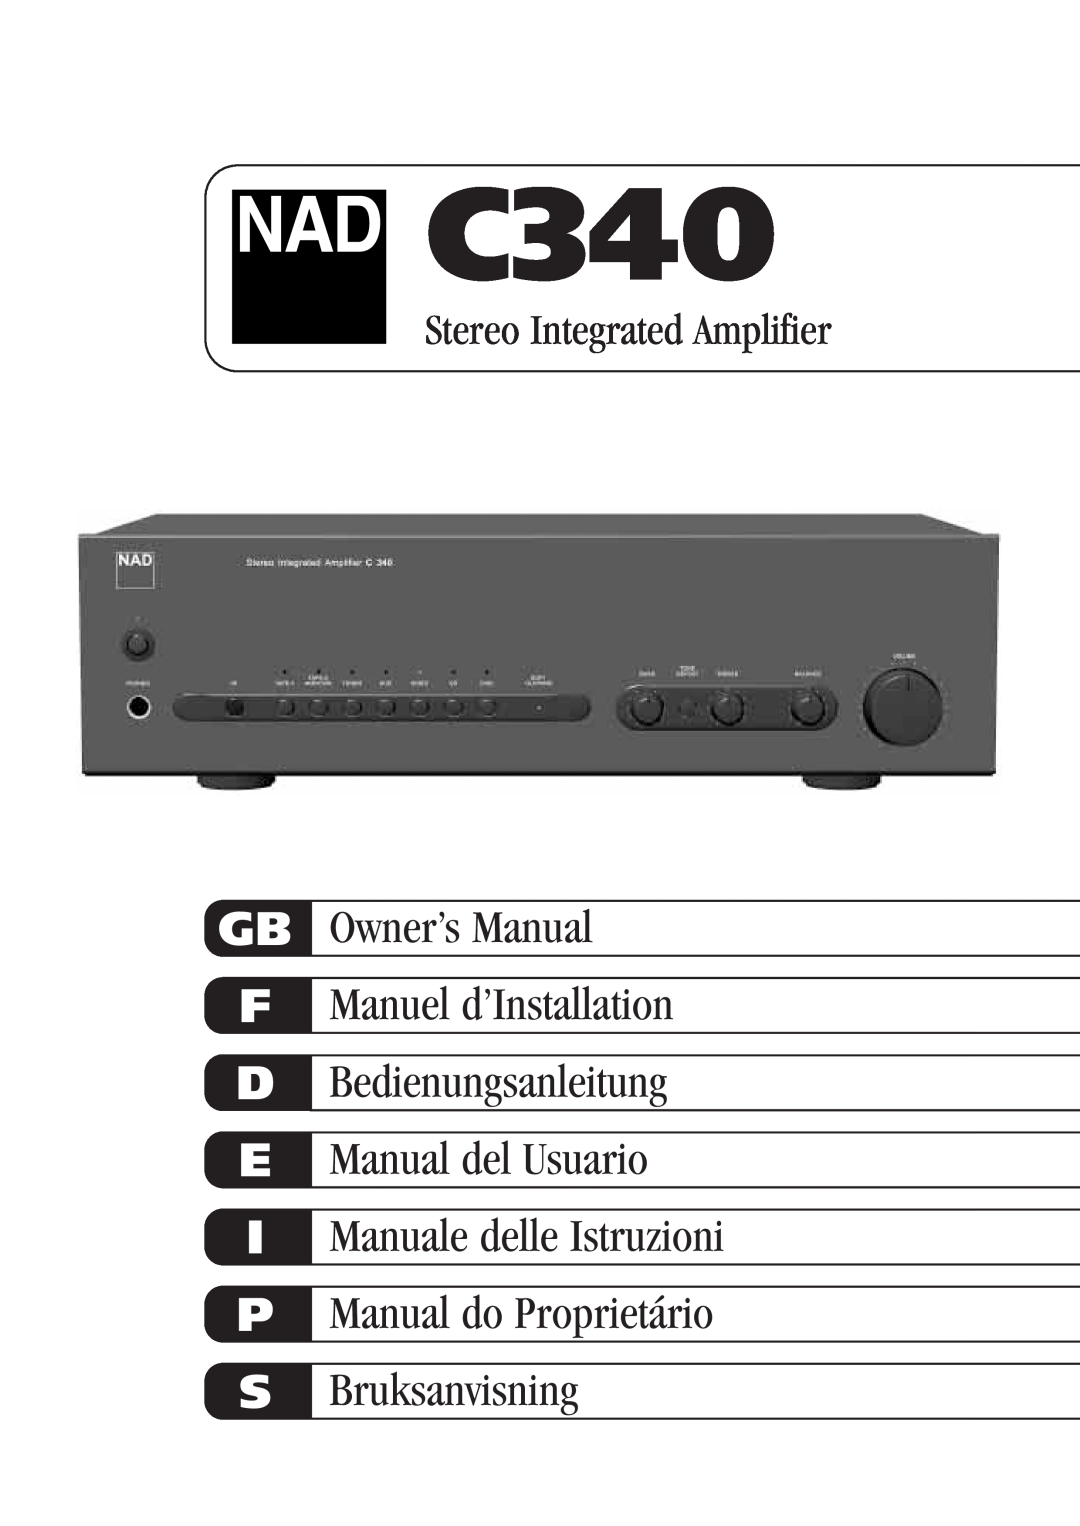 NAD C340 owner manual Gb F D E I P S, Bedienungsanleitung Manual del Usuario, Bruksanvisning, Stereo Integrated Amplifier 